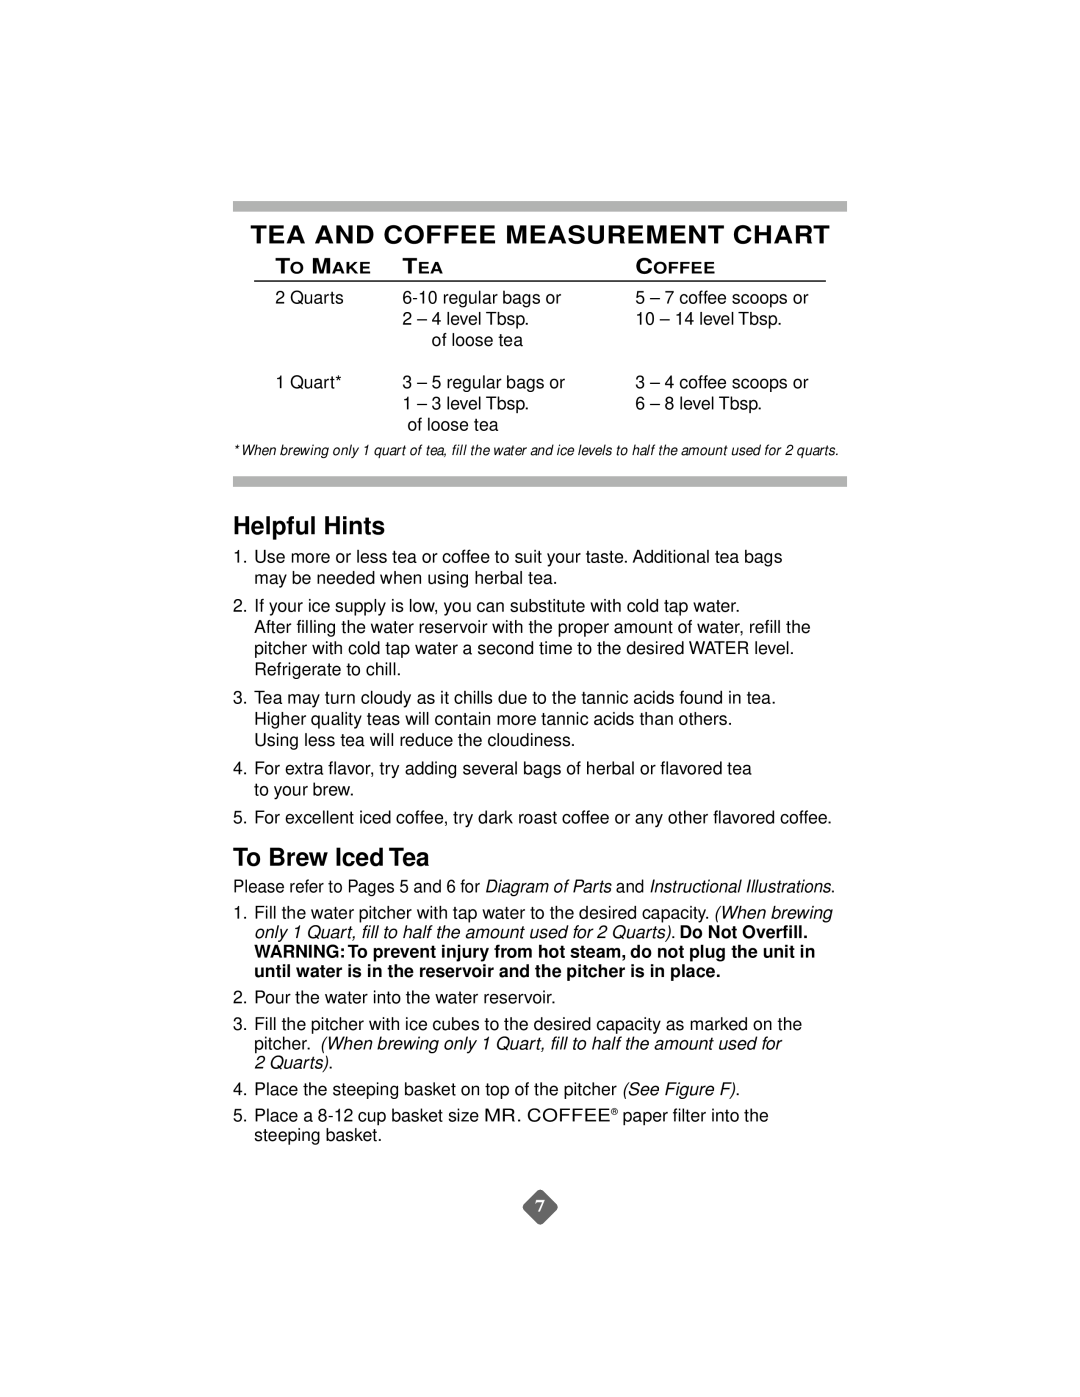 Mr. Coffee TM1 instruction manual Tea And Coffee Measurement Chart, Helpful Hints, To Brew Iced Tea, Quarts 